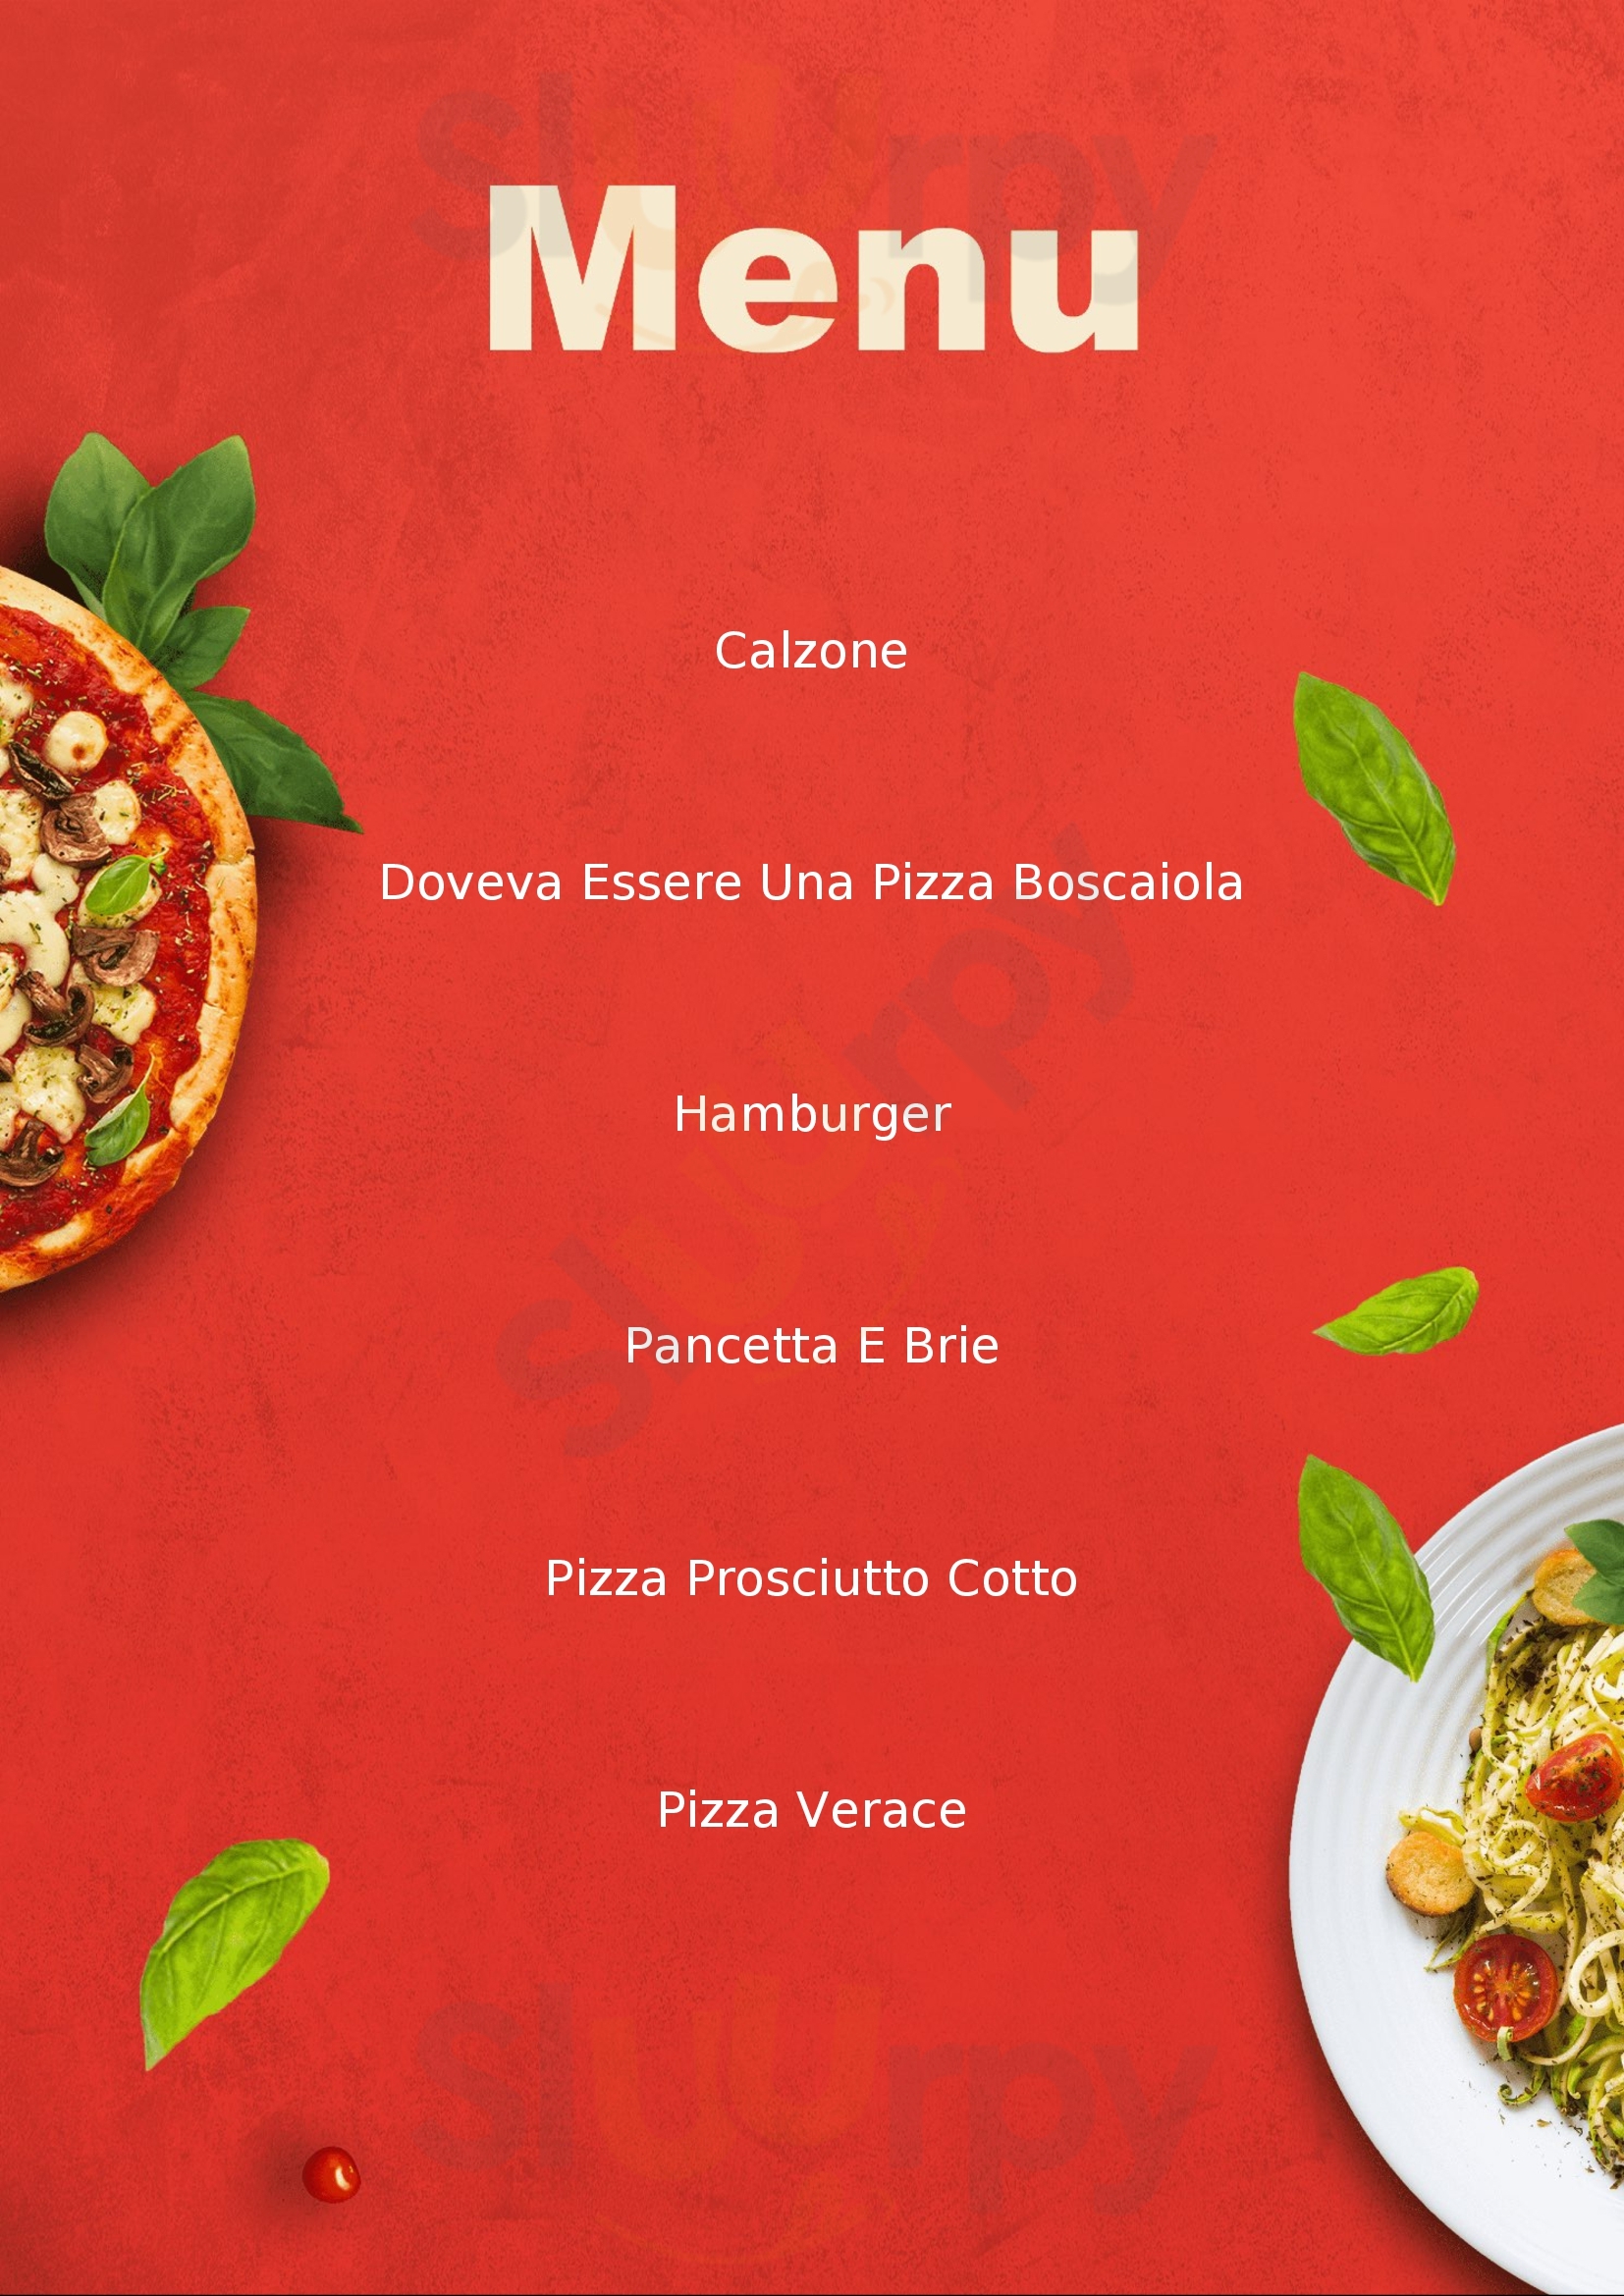 Atipico Pizza Gourmet Rodengo Saiano menù 1 pagina